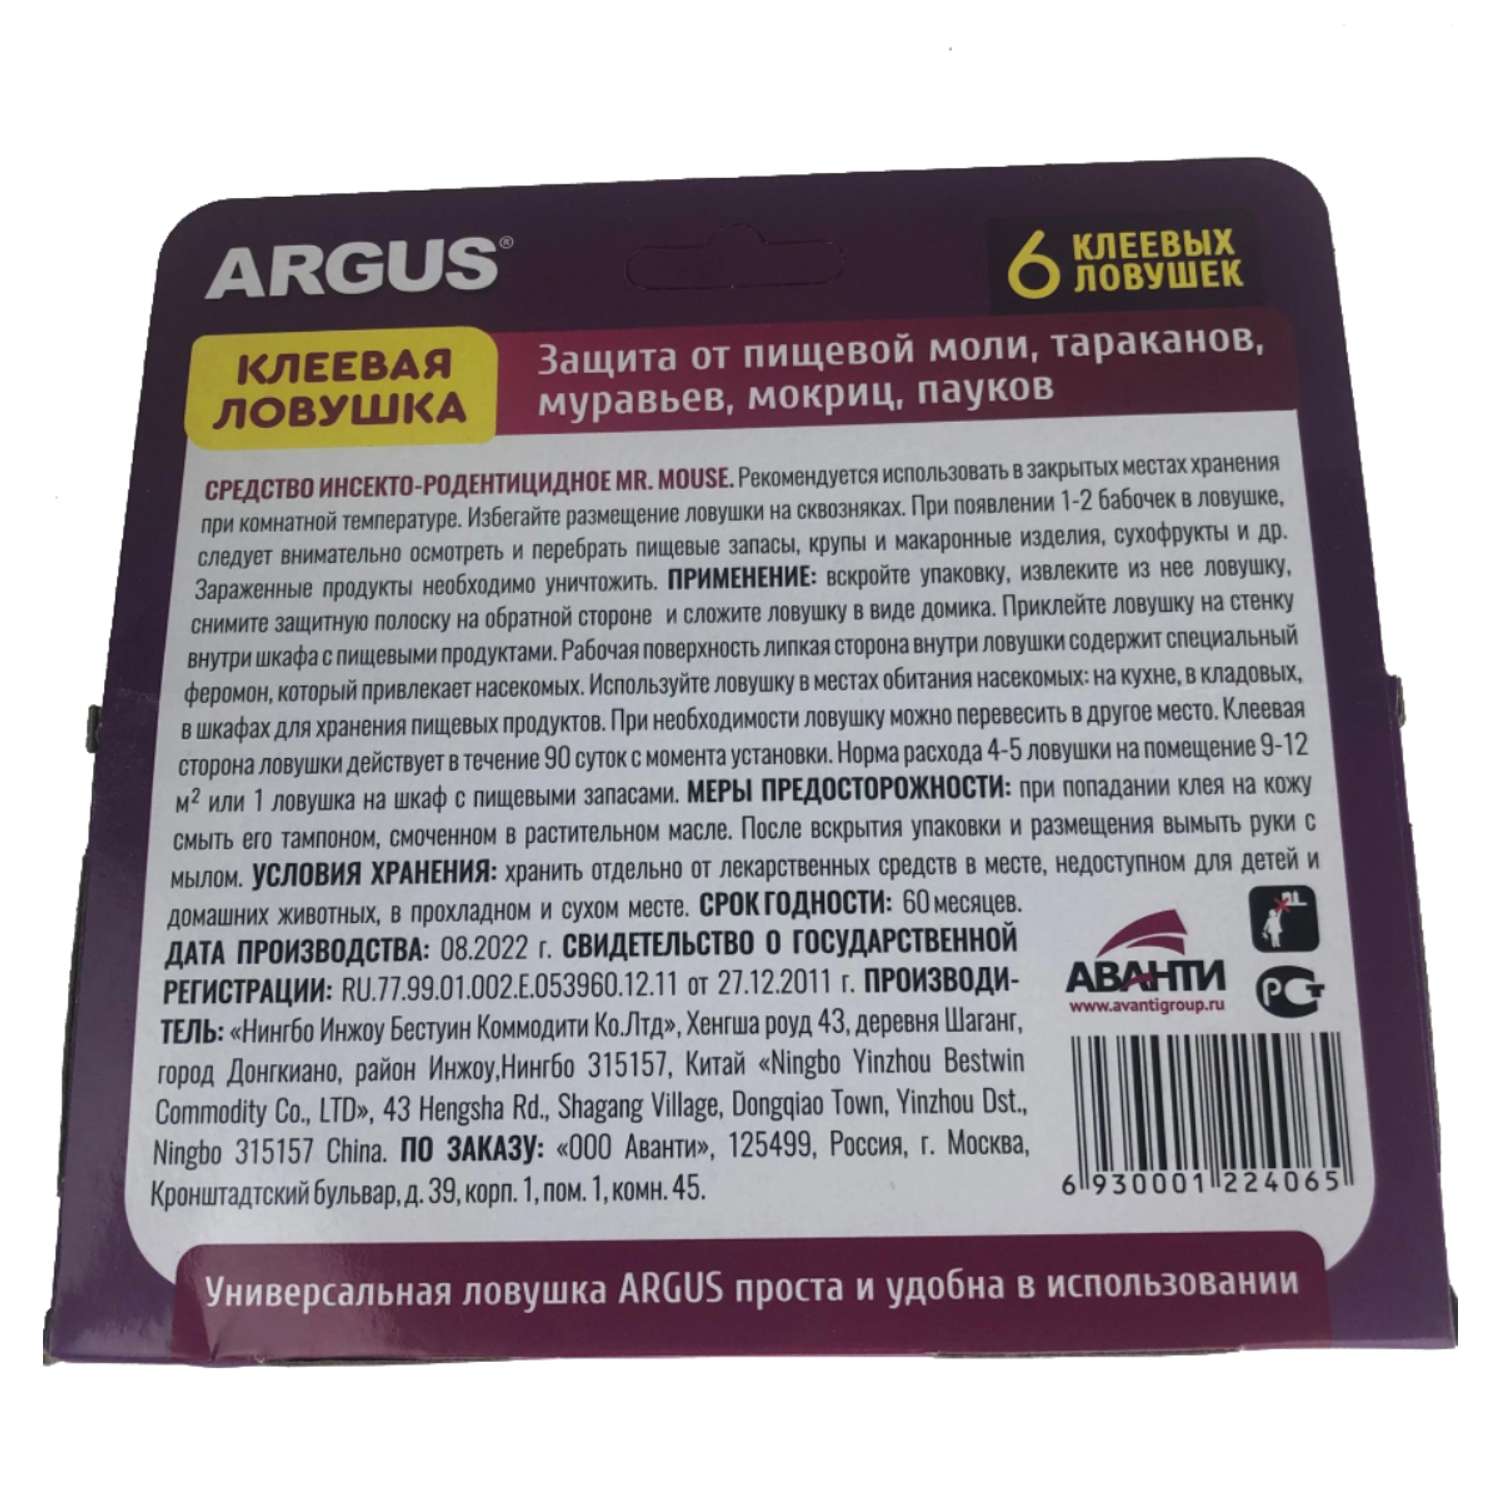 Клеевые ловушки ARGUS от пищевой моли 6 шт - фото 2